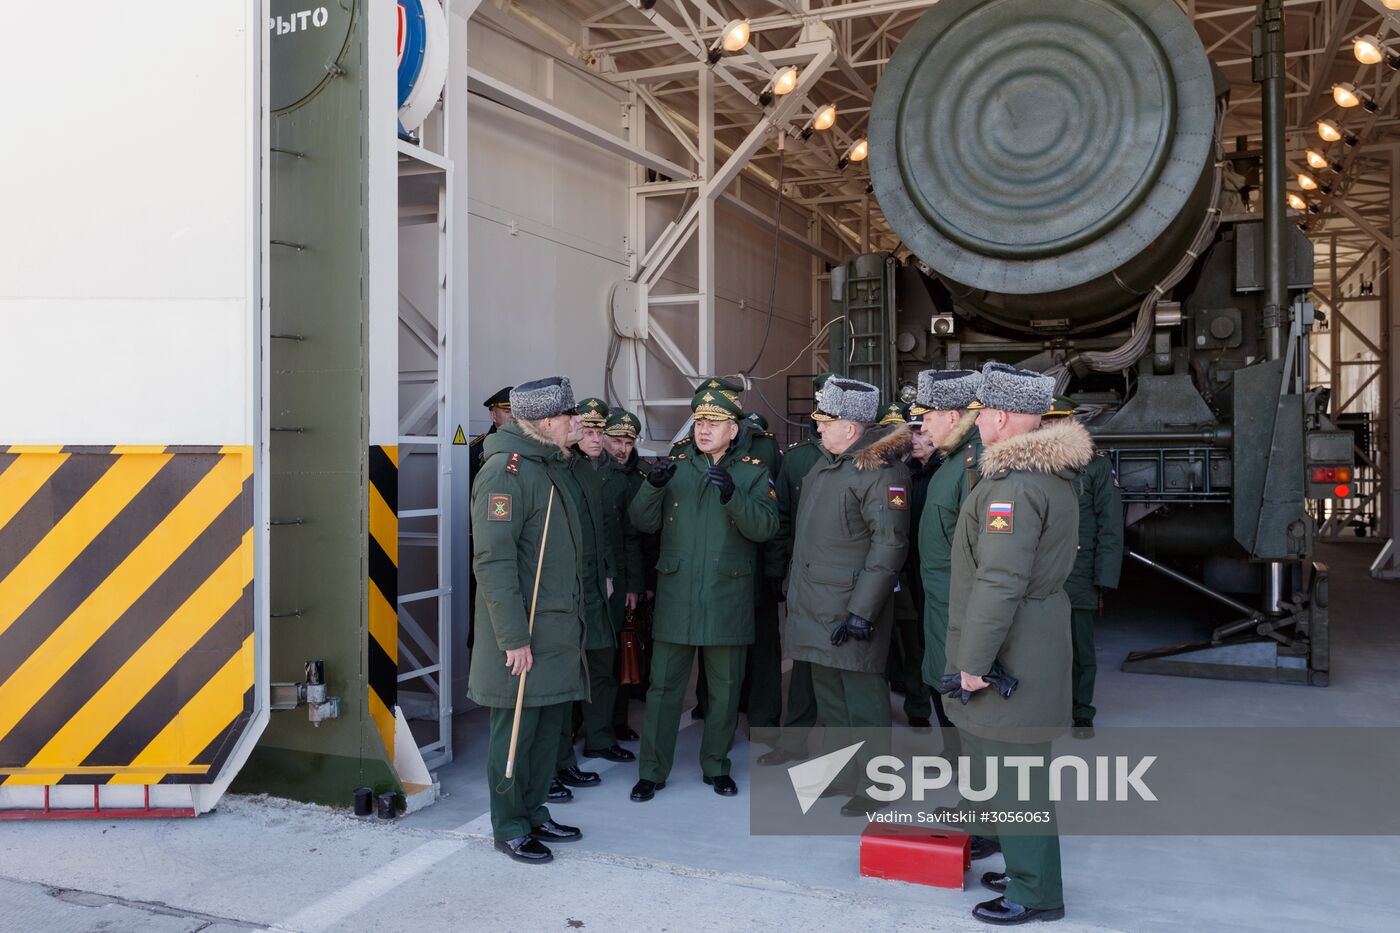 Defense Minister Shoigu's working trip to Novosibirsk